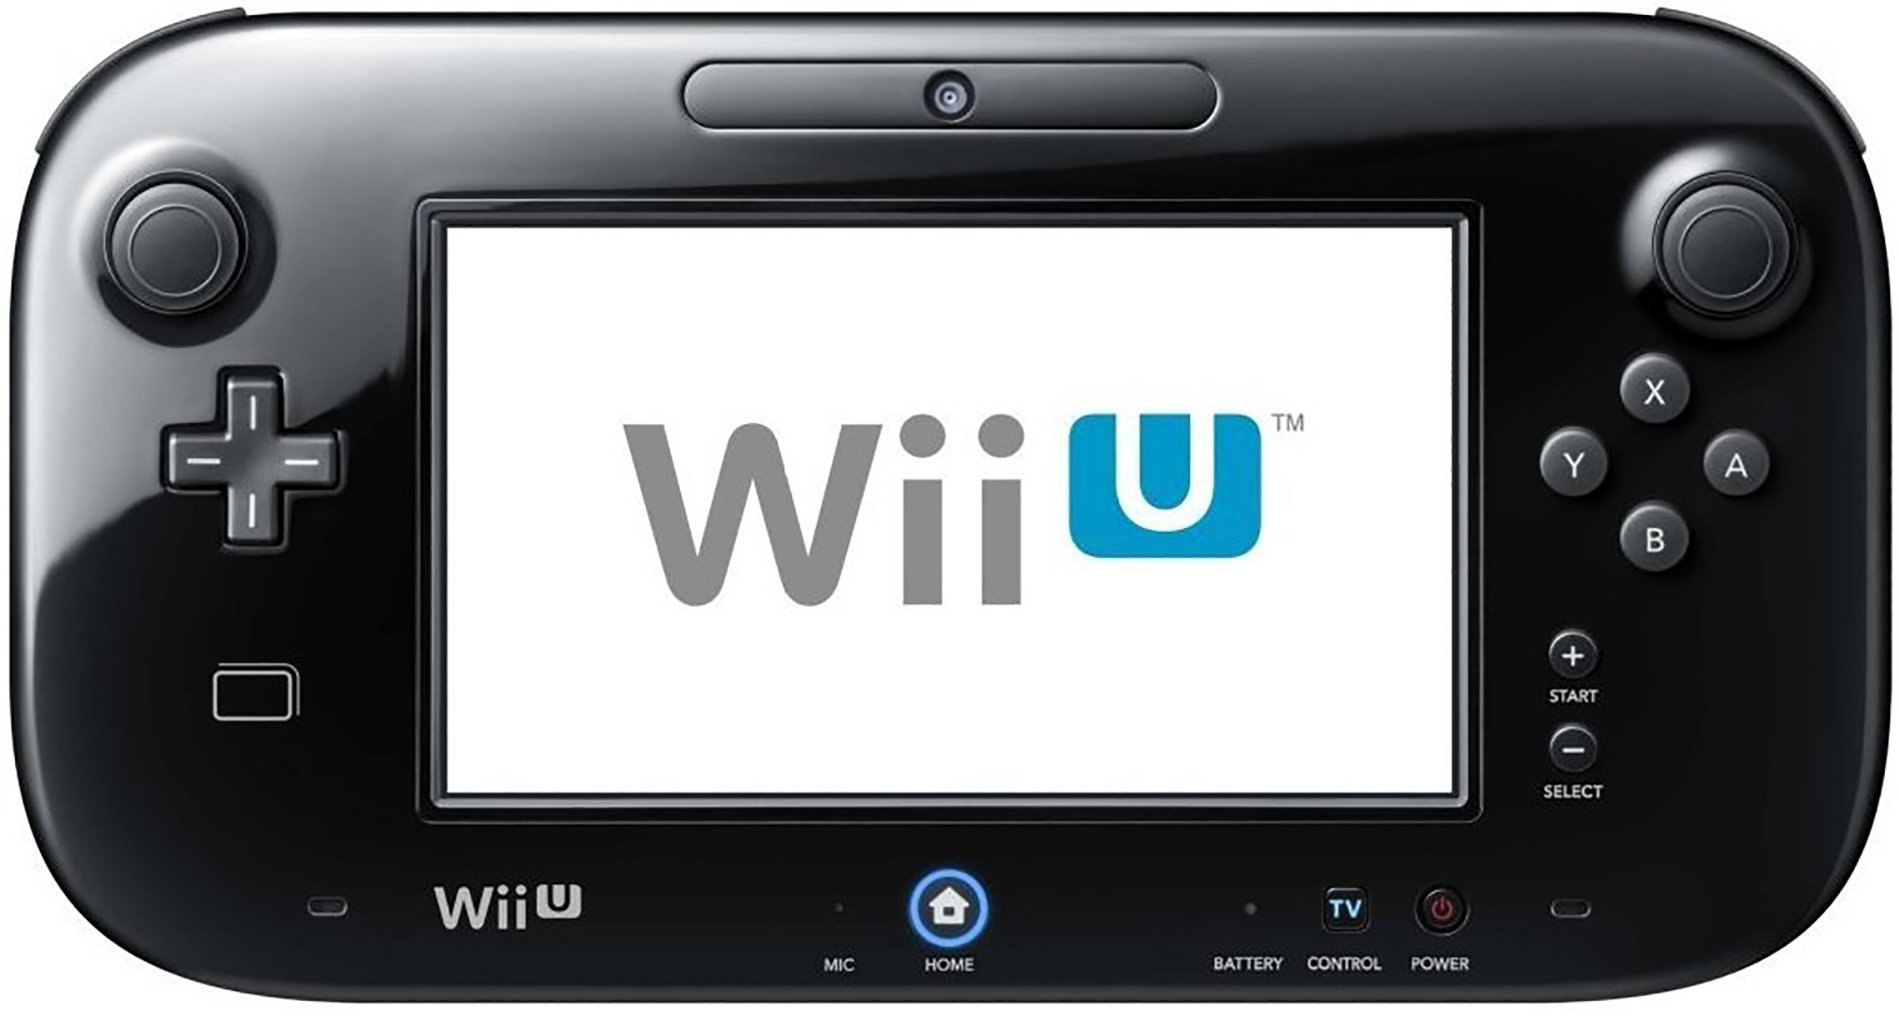 Ultra 64: Wii Universe